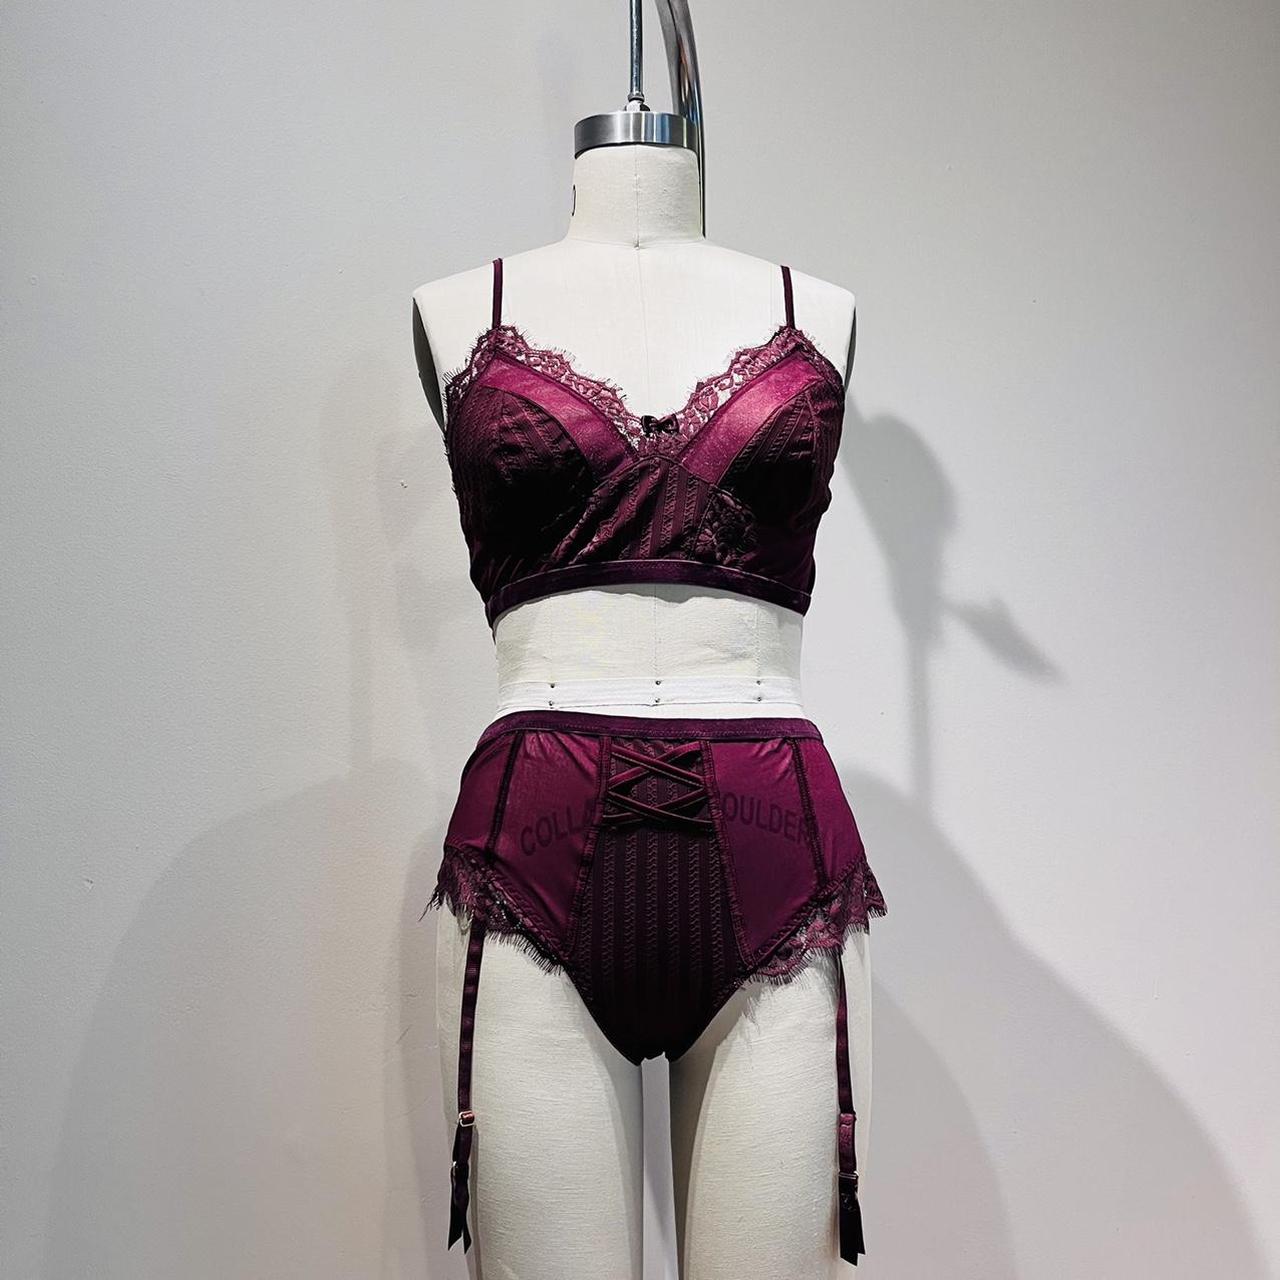 Product Image 1 - Burgundy Vintage style lingerie set